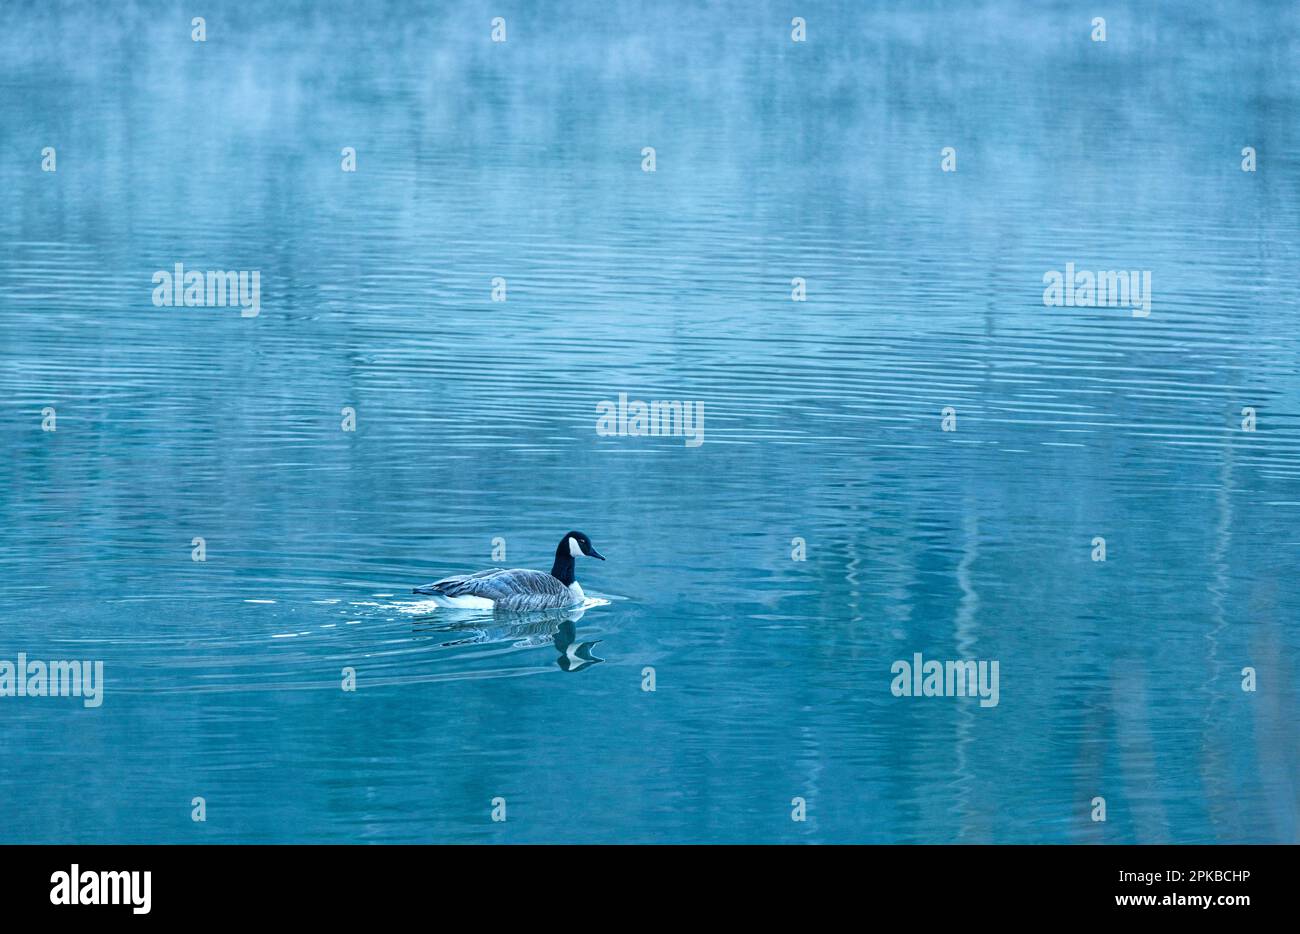 Europe, Germany, Hesse, Waldecker Land, Kellerwald-Edersee National Park, Canada Goose (Branta canadensis) swimming on the water Stock Photo